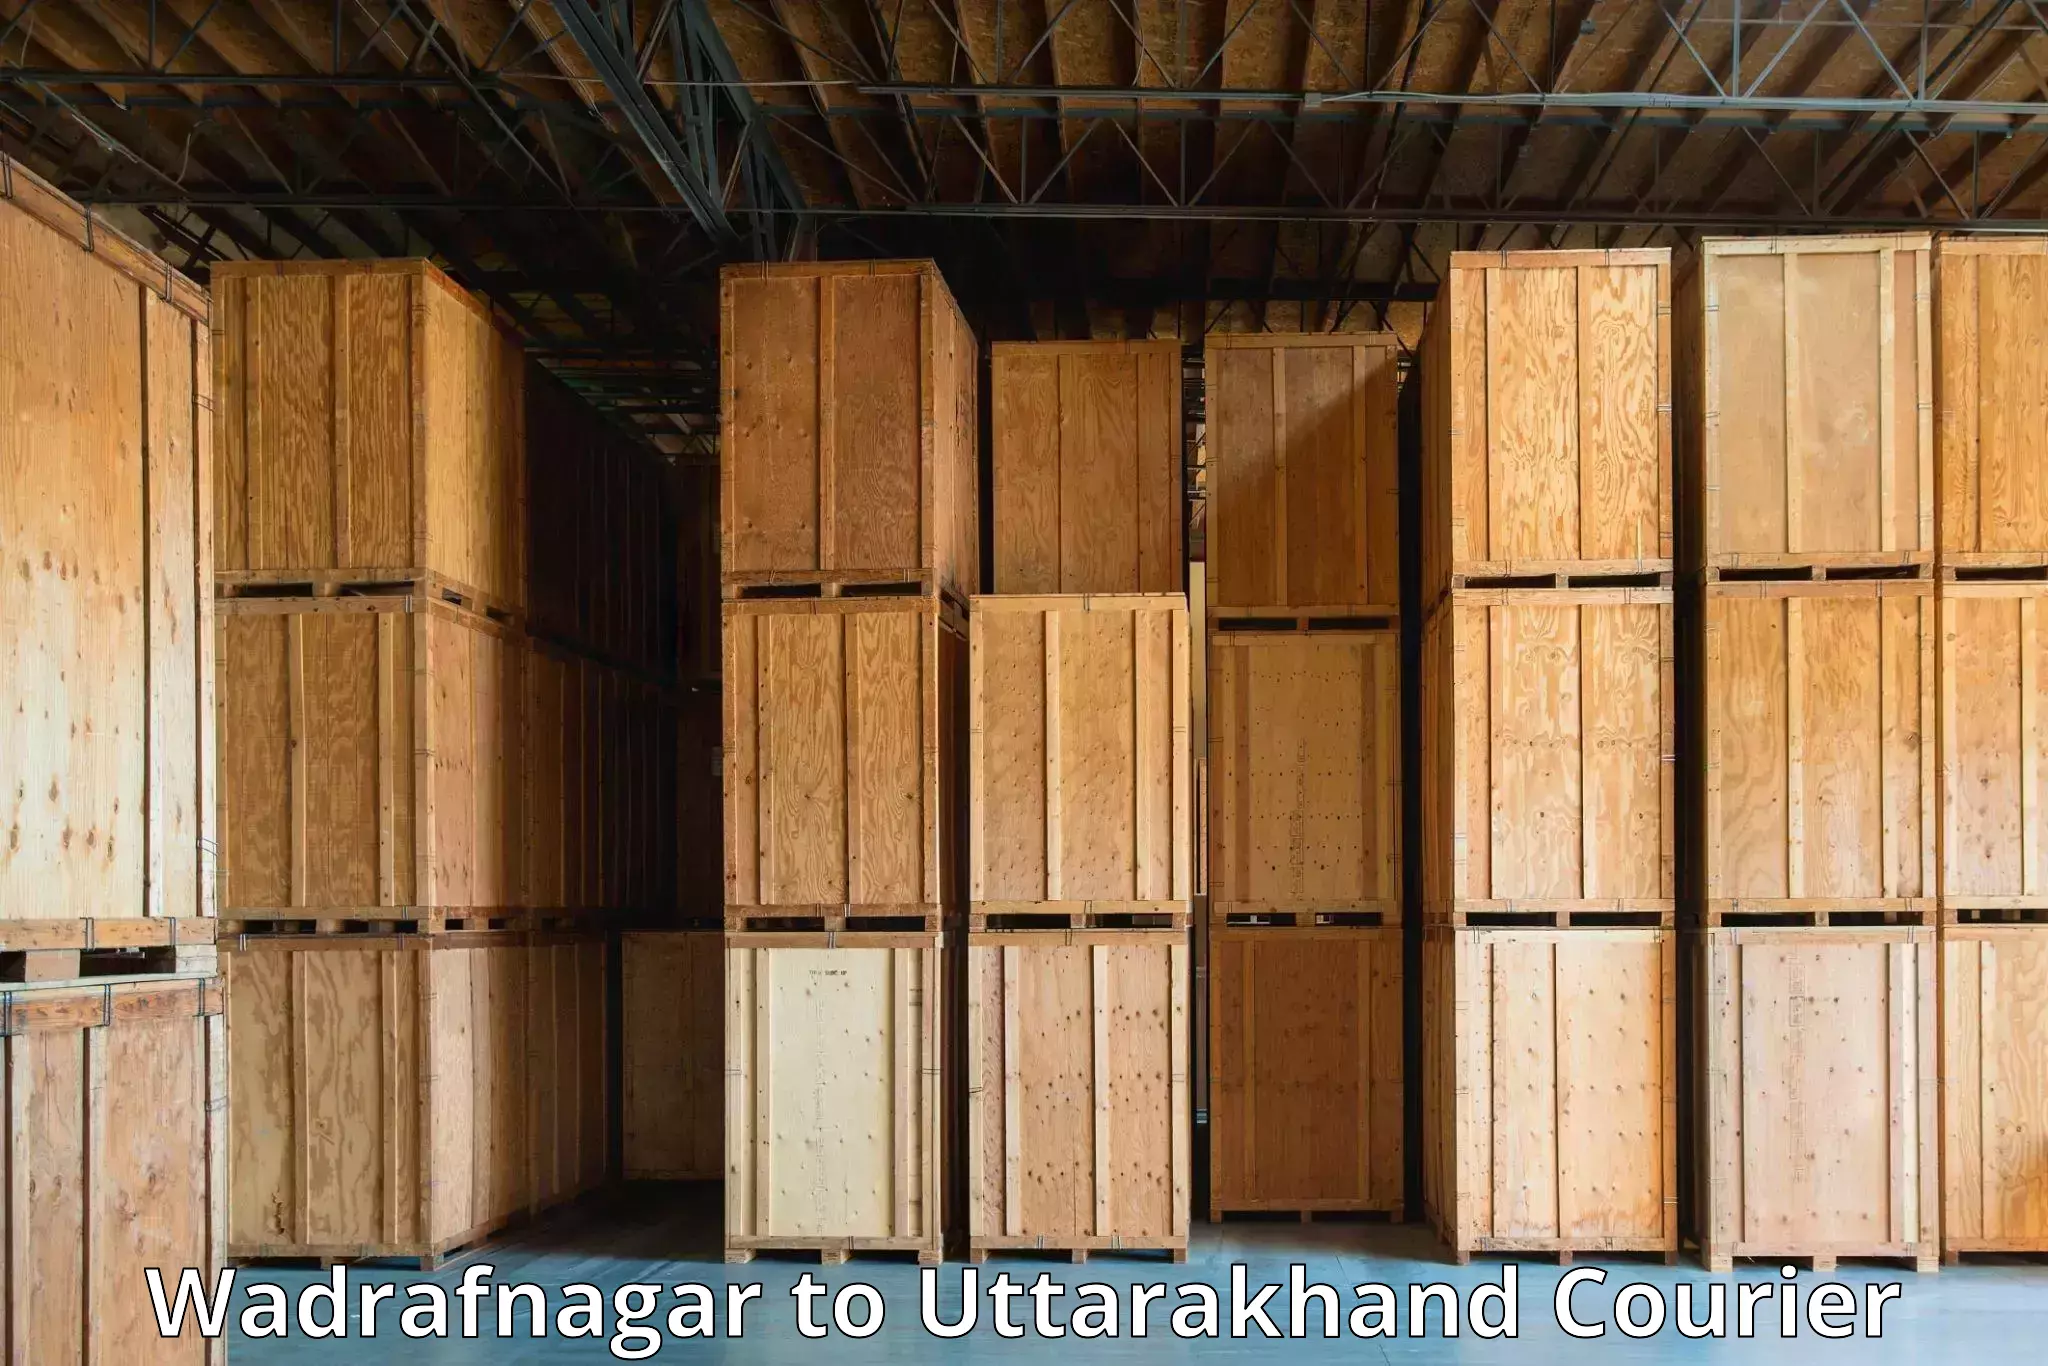 Advanced shipping network Wadrafnagar to IIT Roorkee